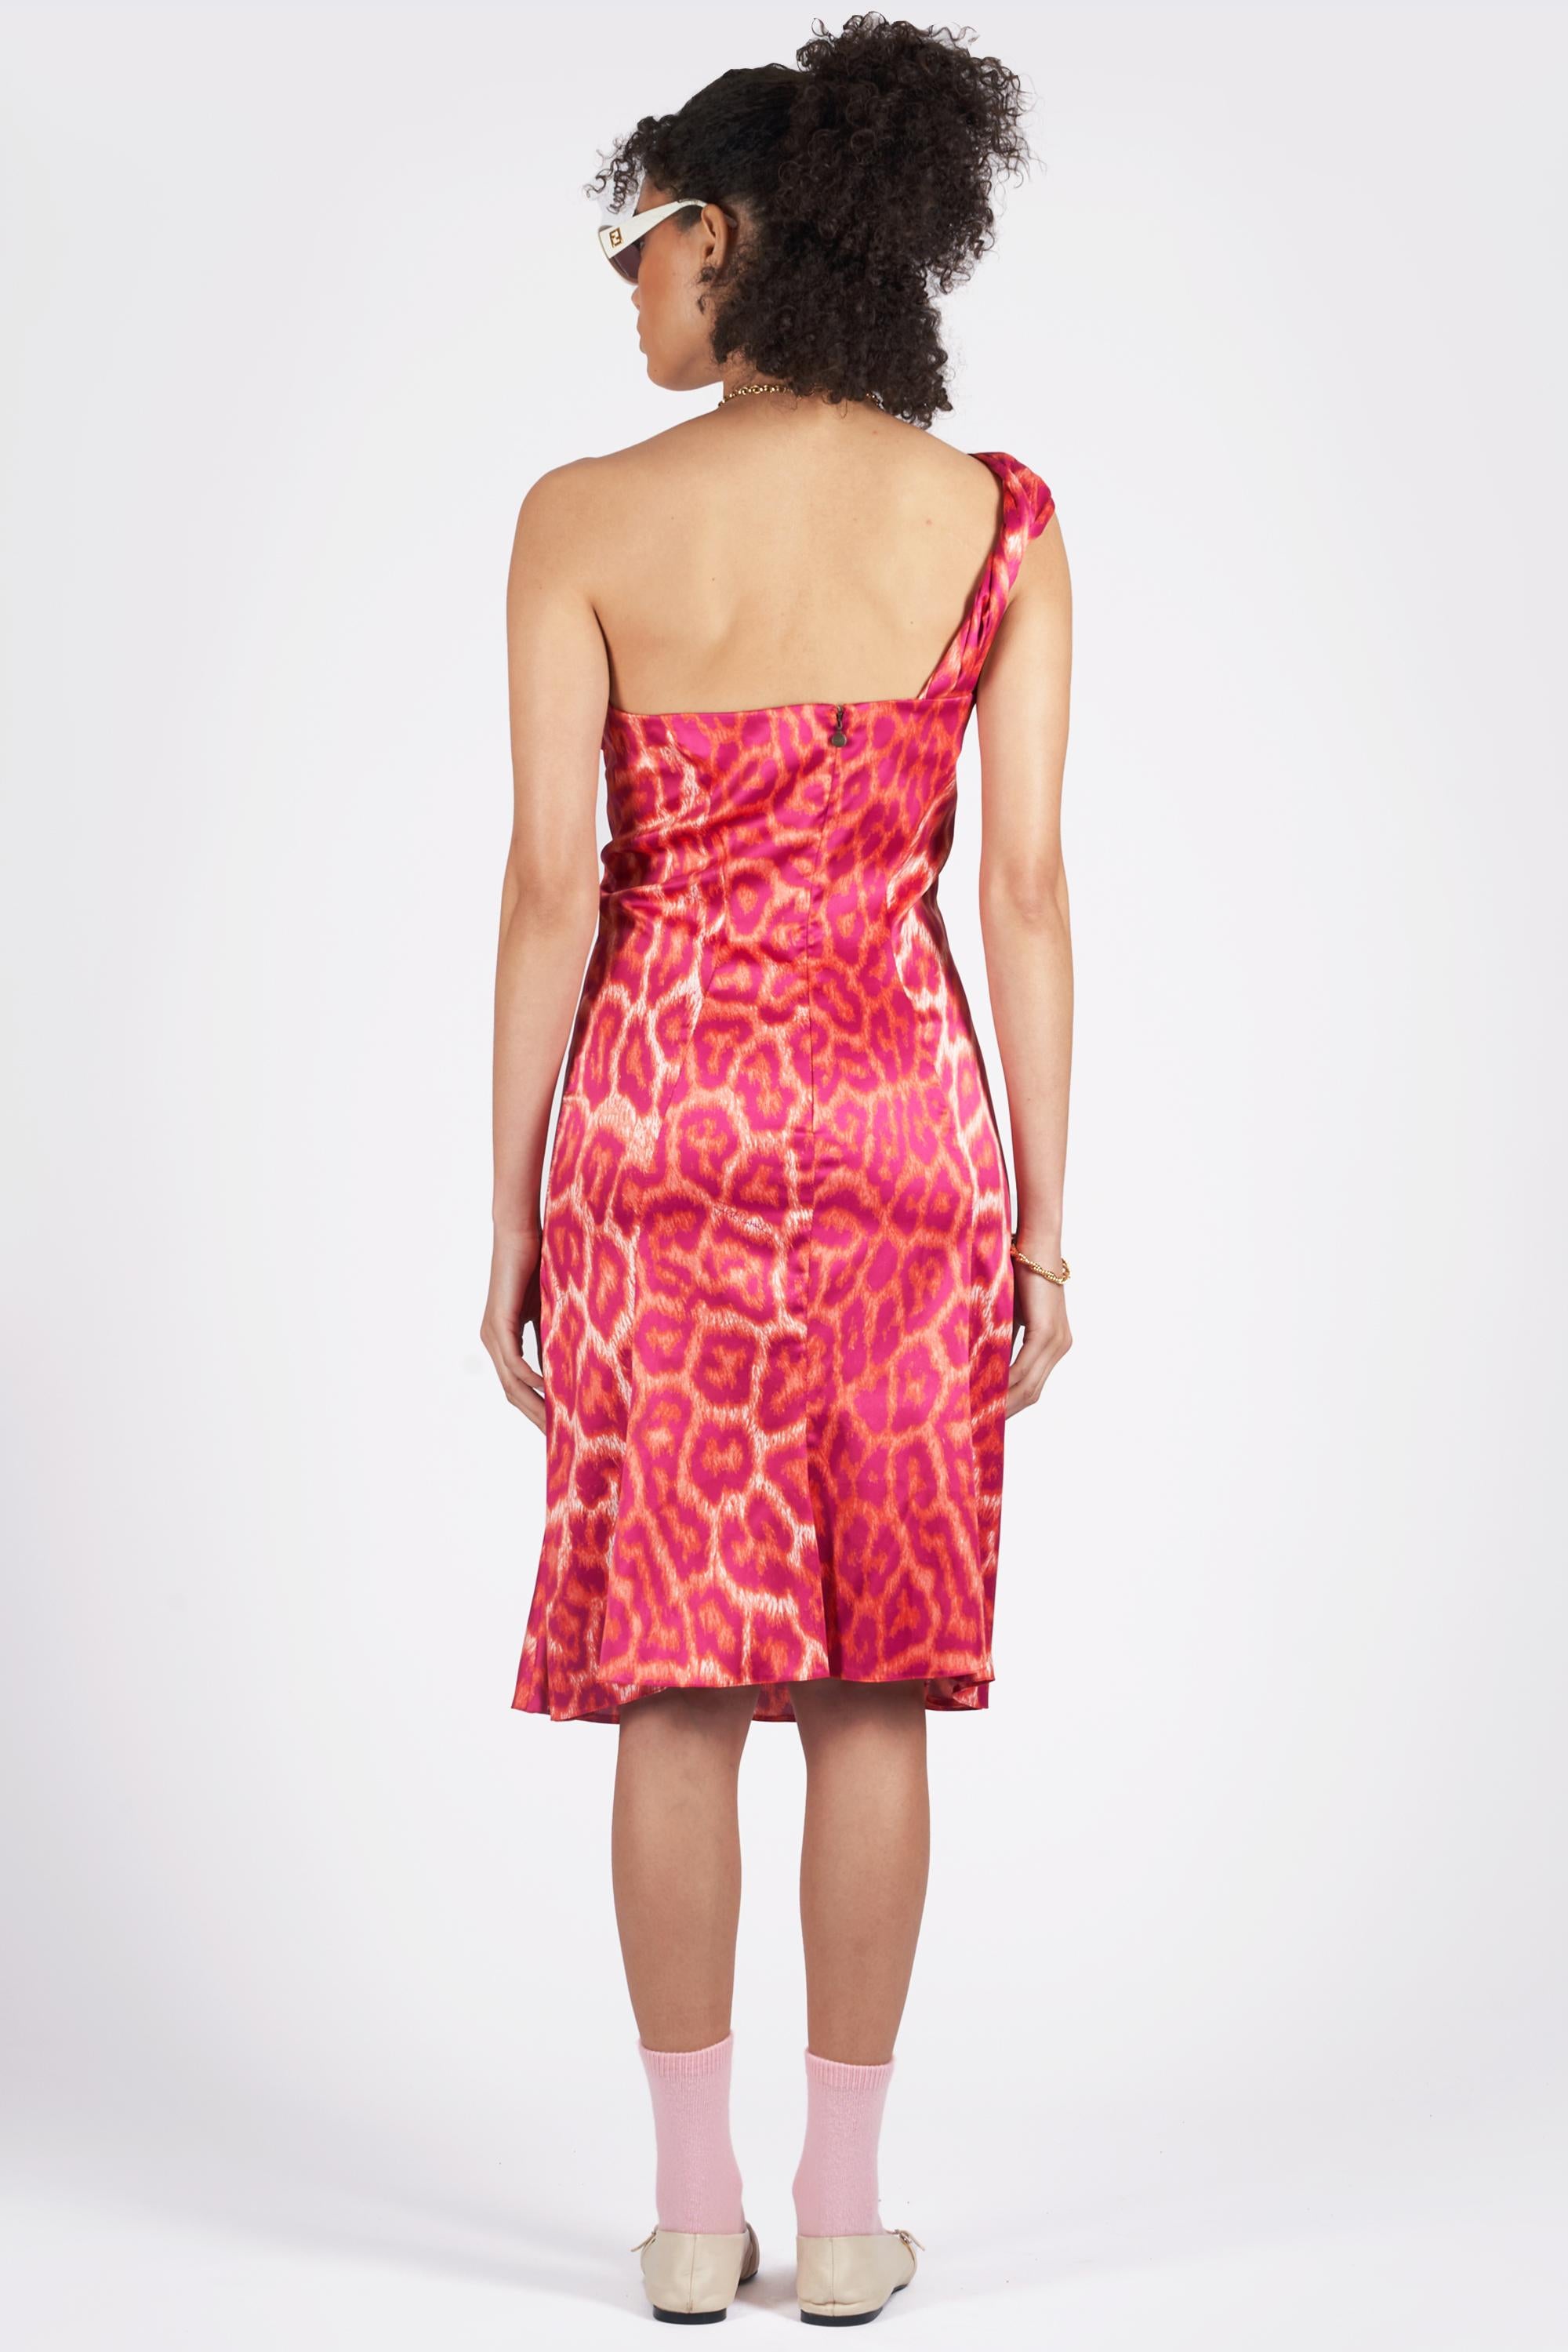 Women's S/S 2008 Leopard Print One Shoulder Dress For Sale